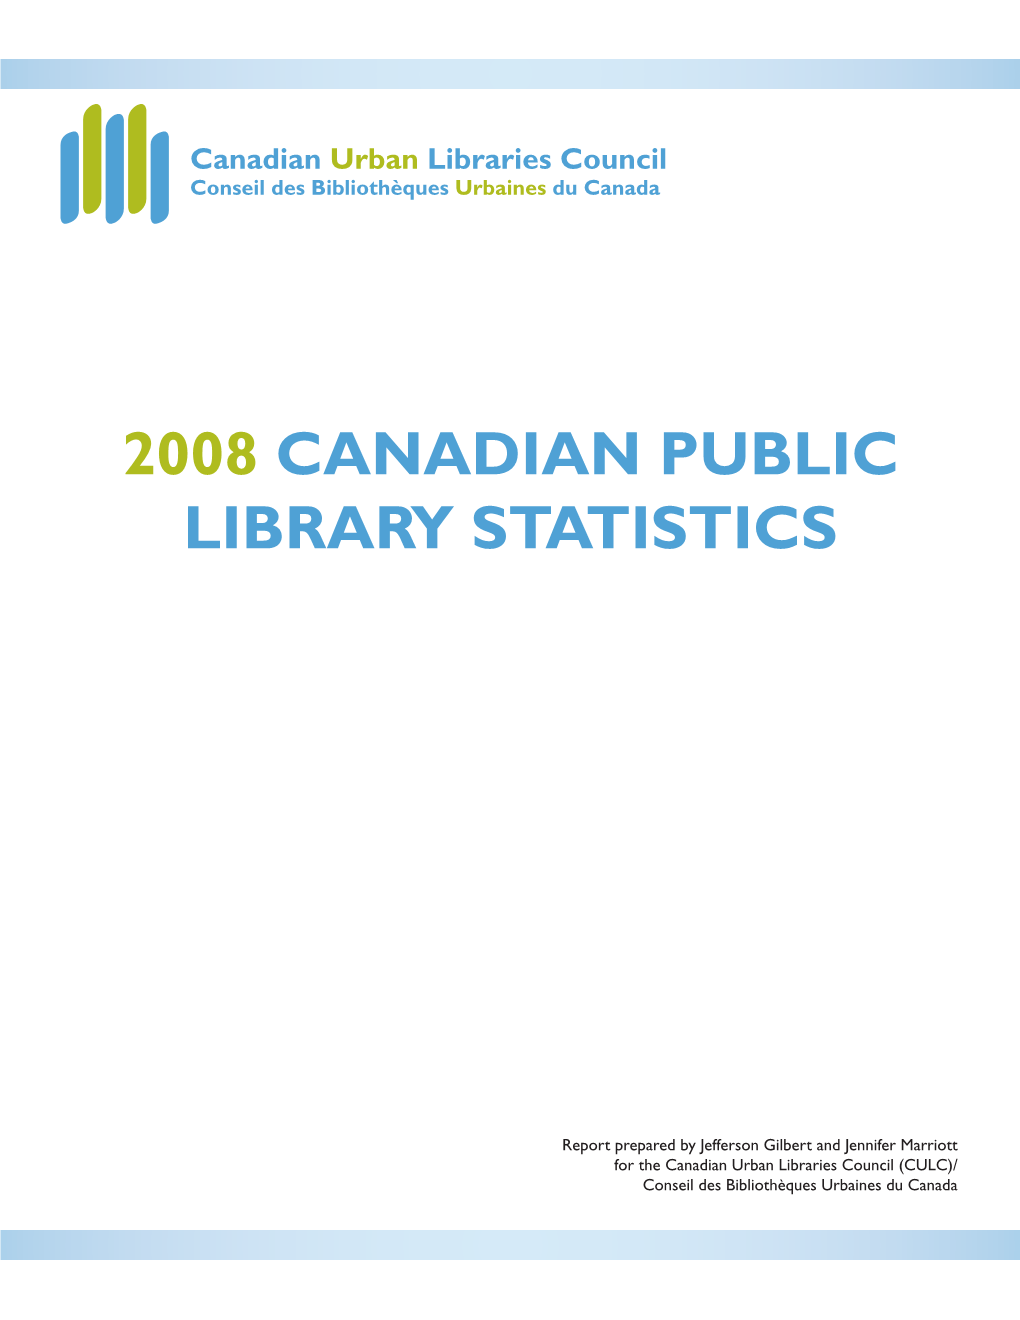 2008 CULC/CBUC Public Library Survey Report